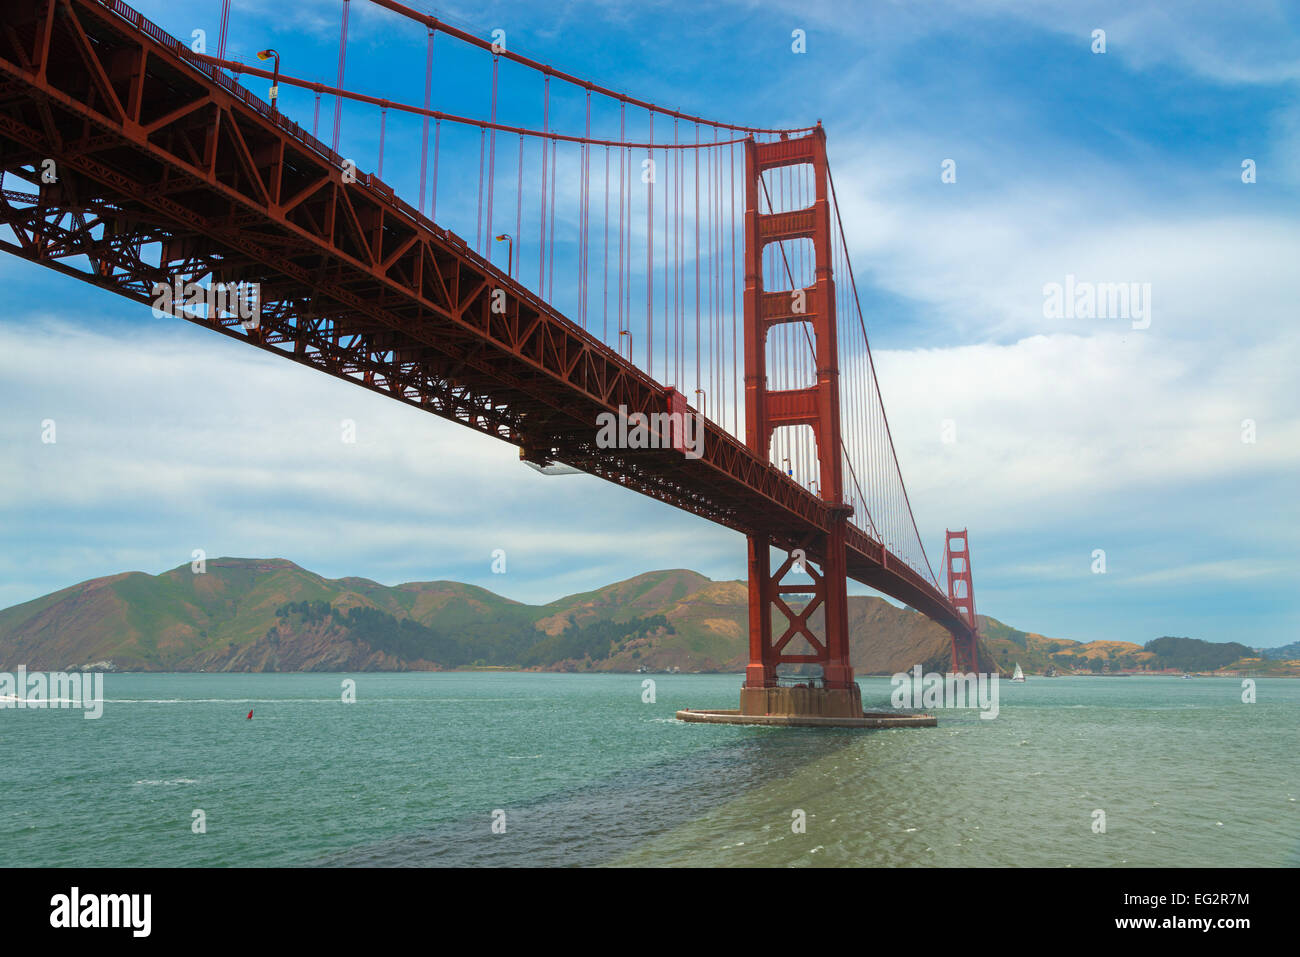 The famous Golden Gate Bridge in San Francisco California, USA Stock Photo